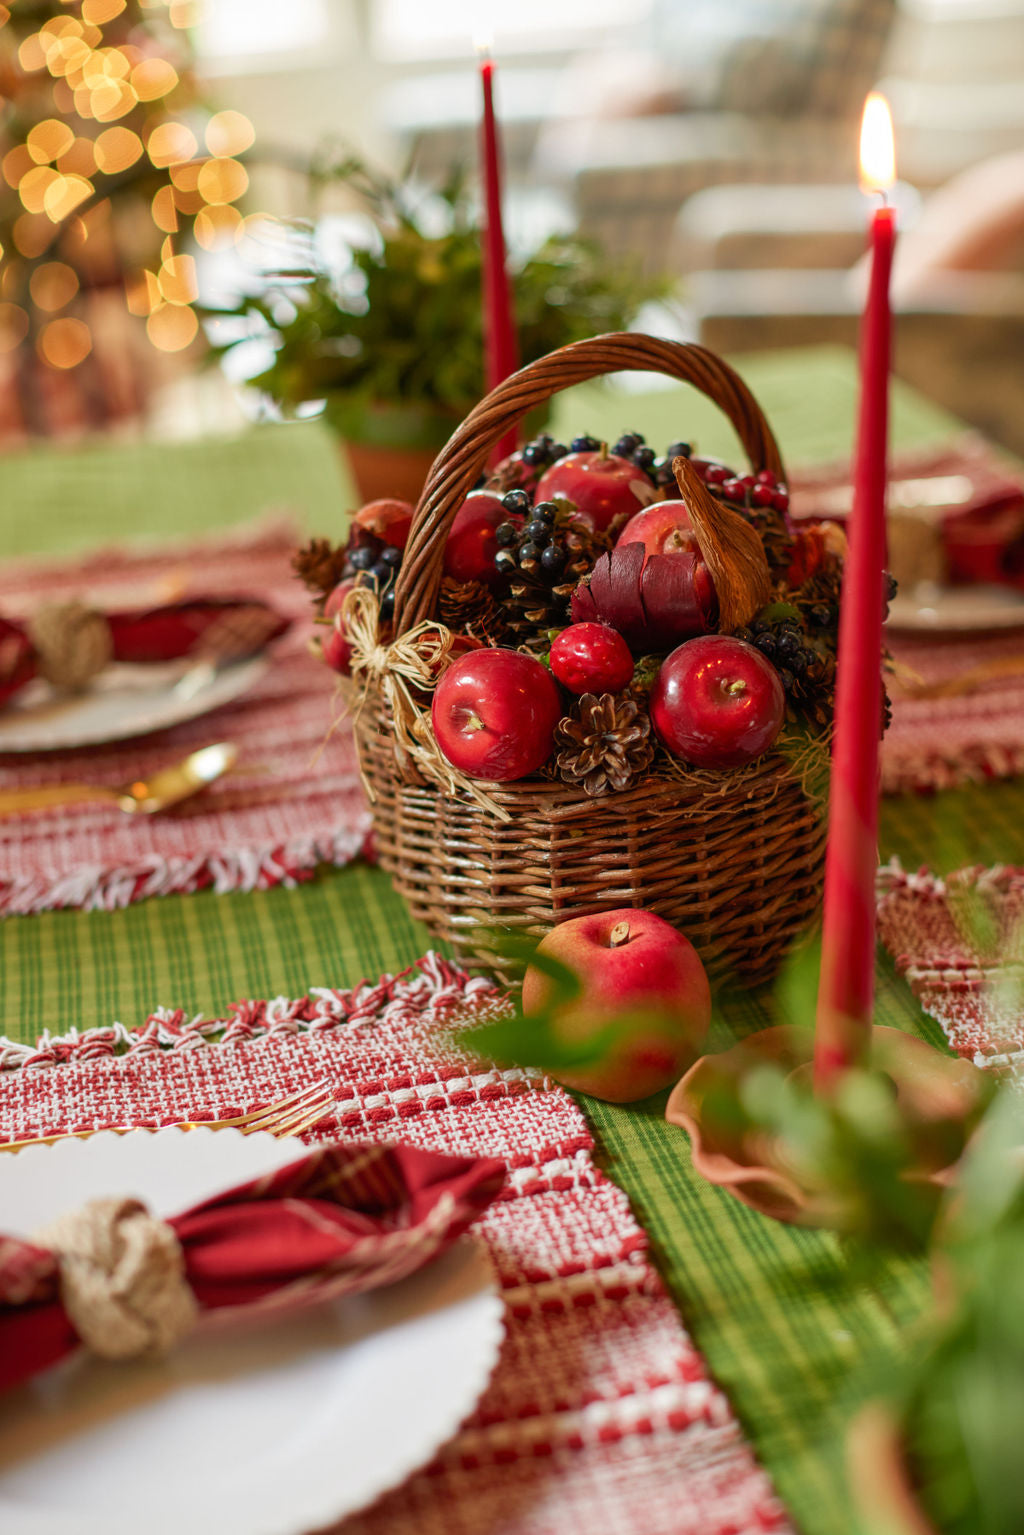 Decorative Holiday Basket with Fruit